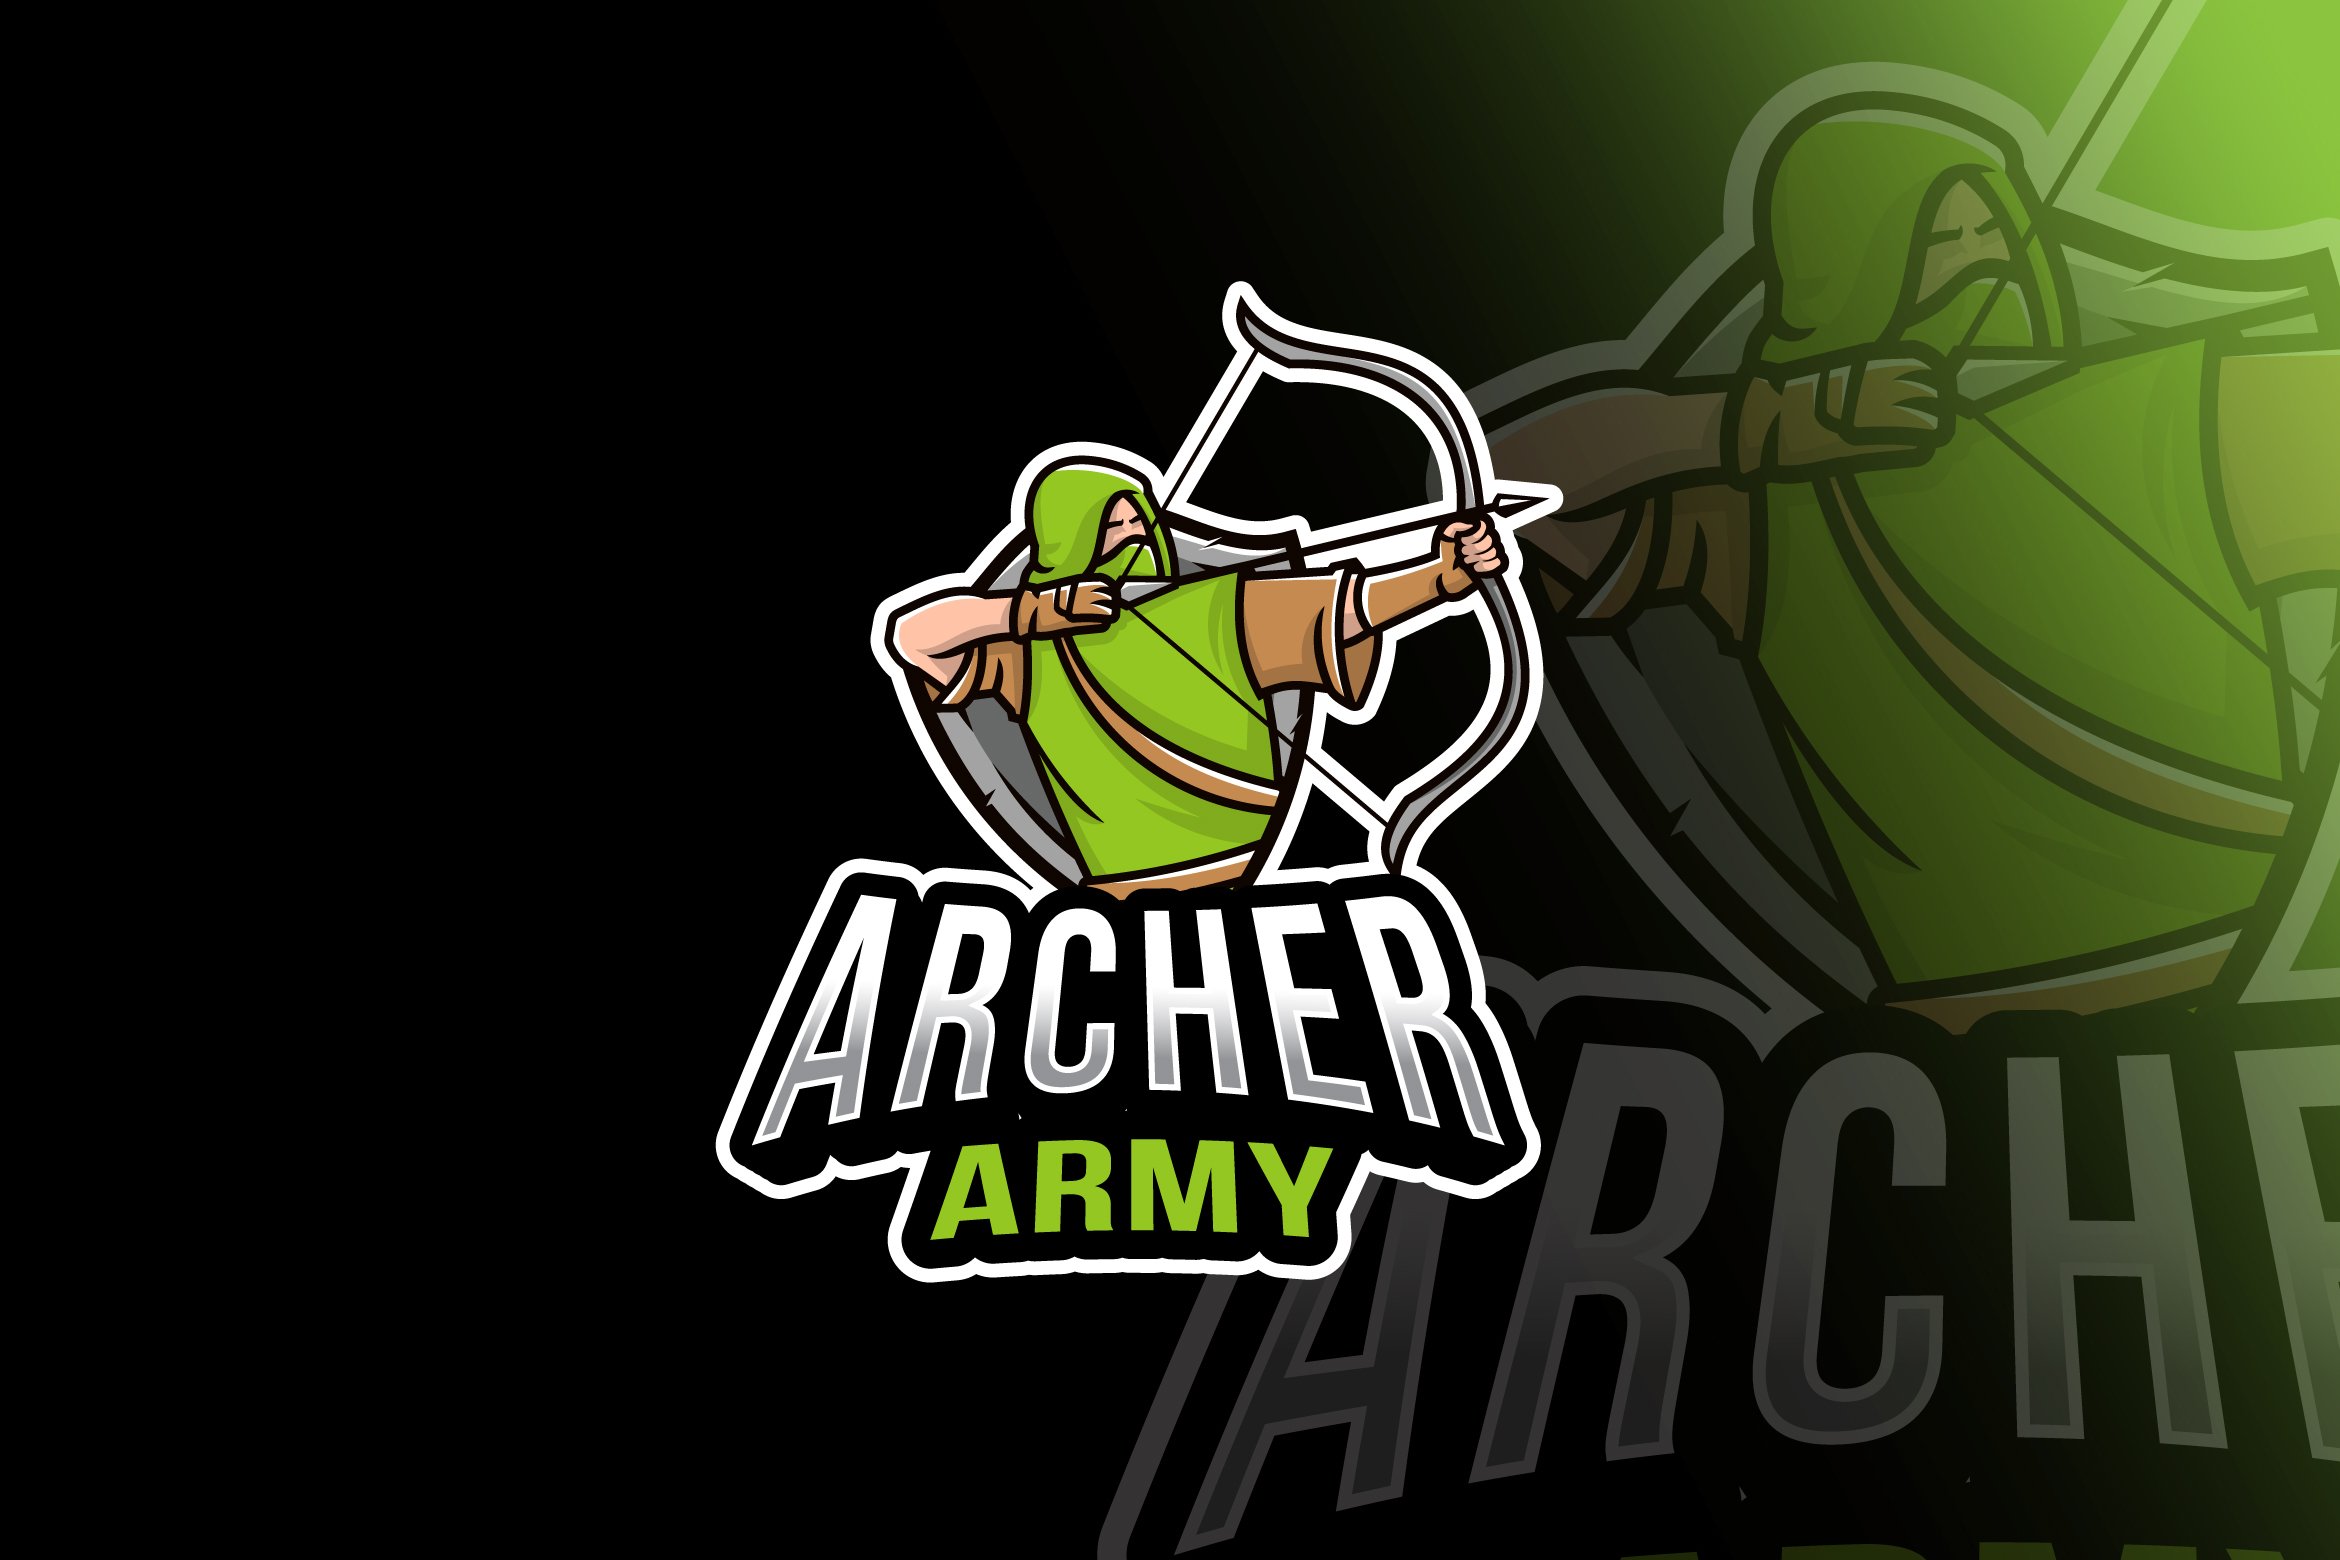 Archer Army Esport Logo Template cover image.